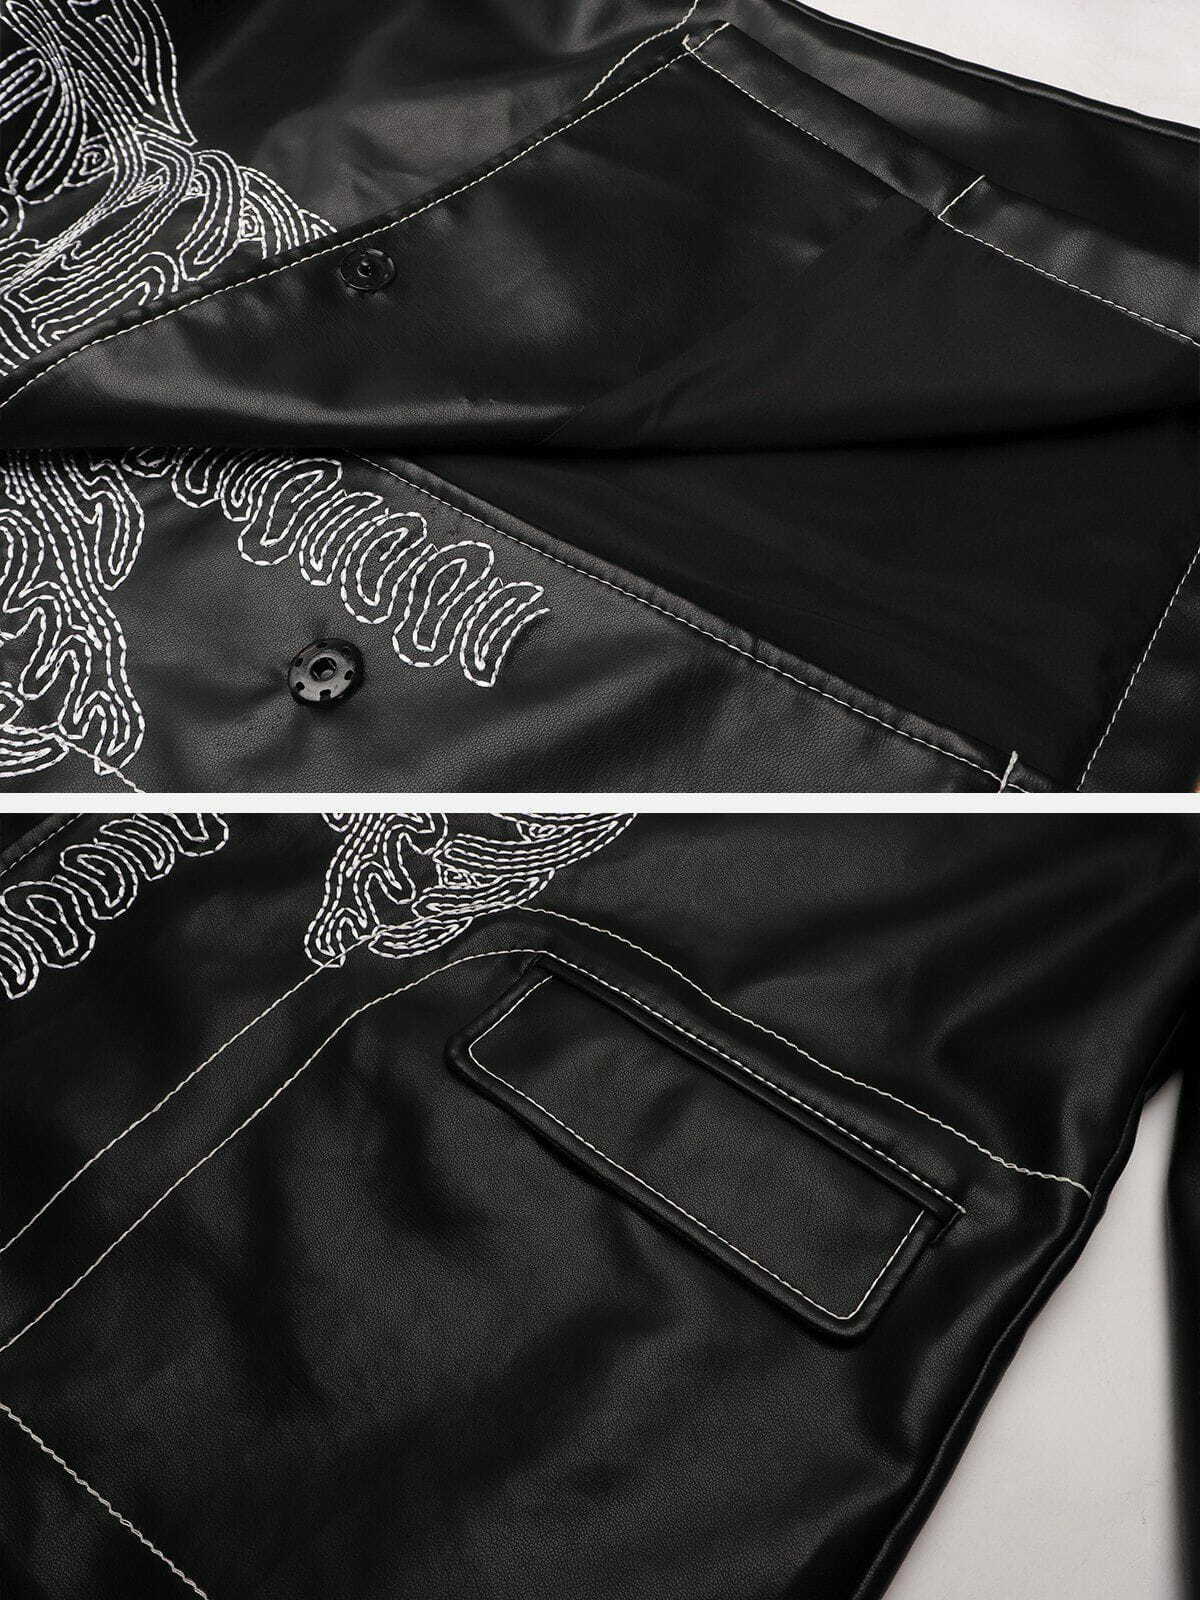 classic black skull jacket [edgy] streetwear essential 8281